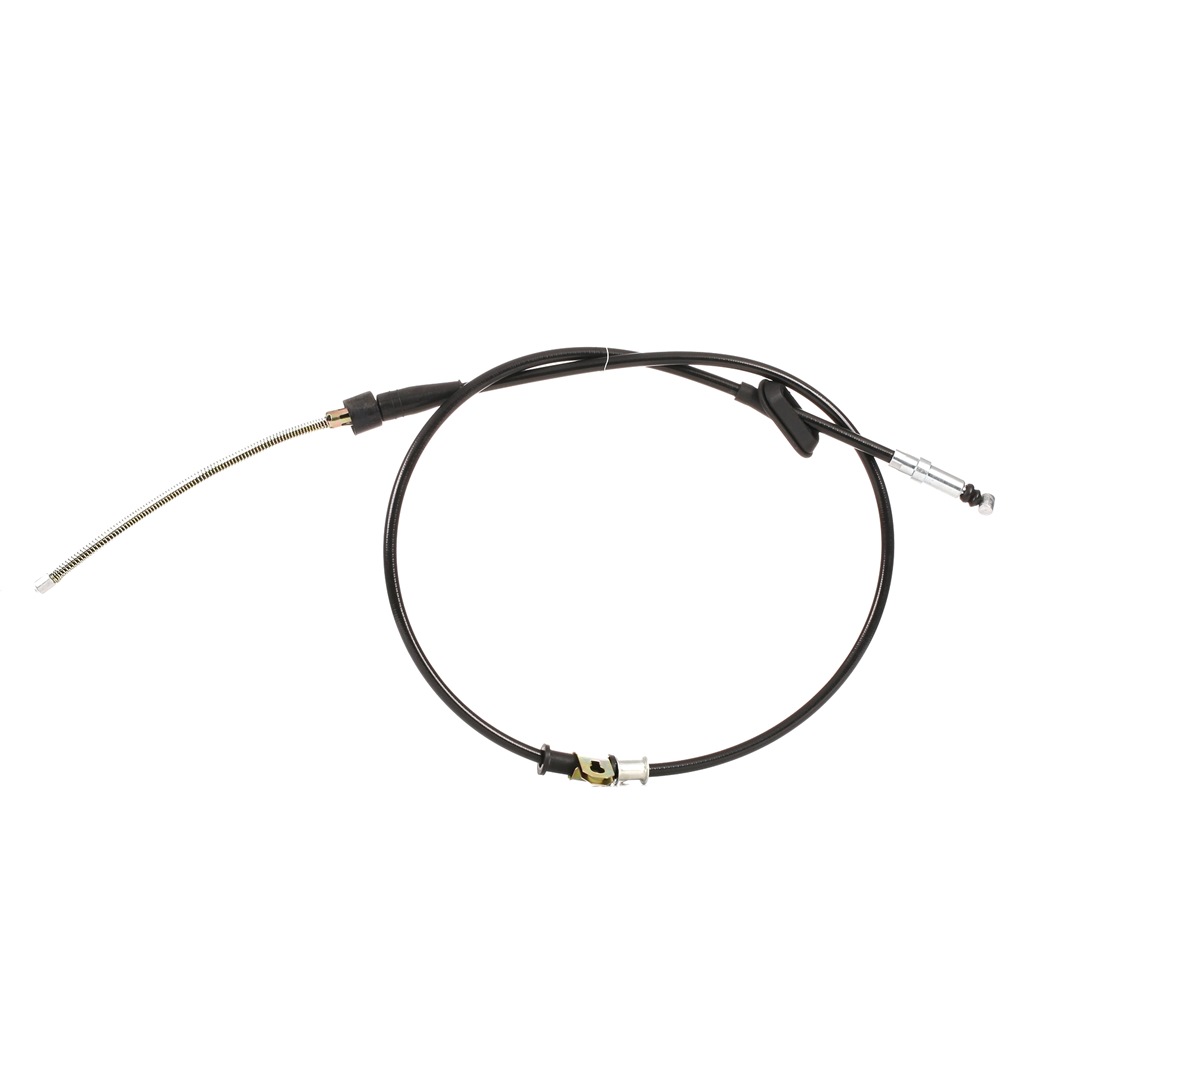 RIDEX 124C0236 Hand brake cable Left Rear, 1568/1286mm, Drum Brake, for parking brake